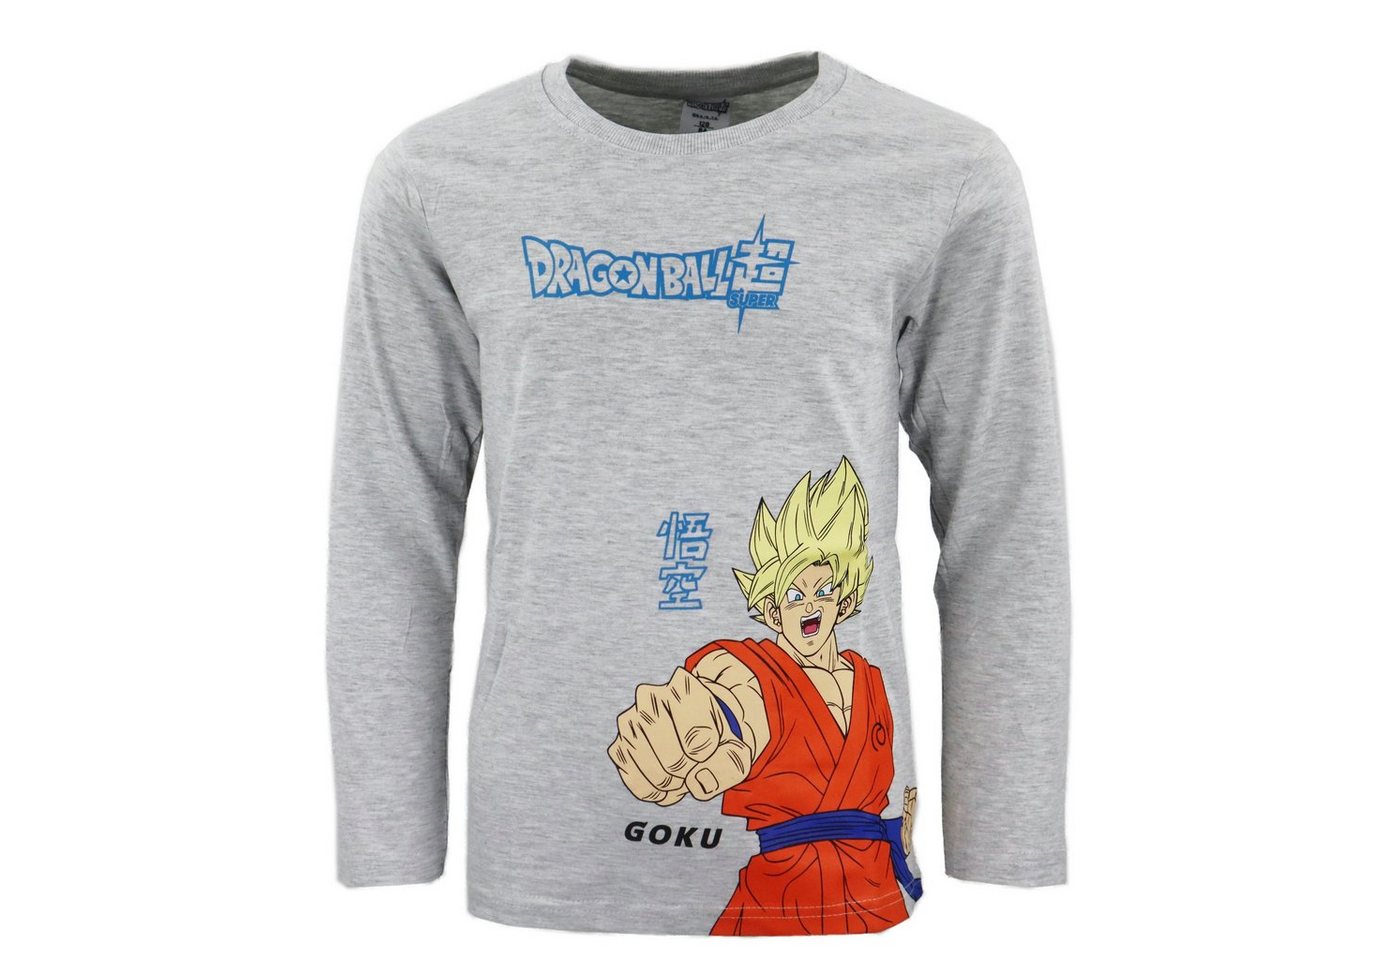 Dragon Ball Langarmshirt Anime Dragonball Super Goku Kinder Jungen langarm Shirt Gr. 104 - 152 Baumwolle von Dragon Ball